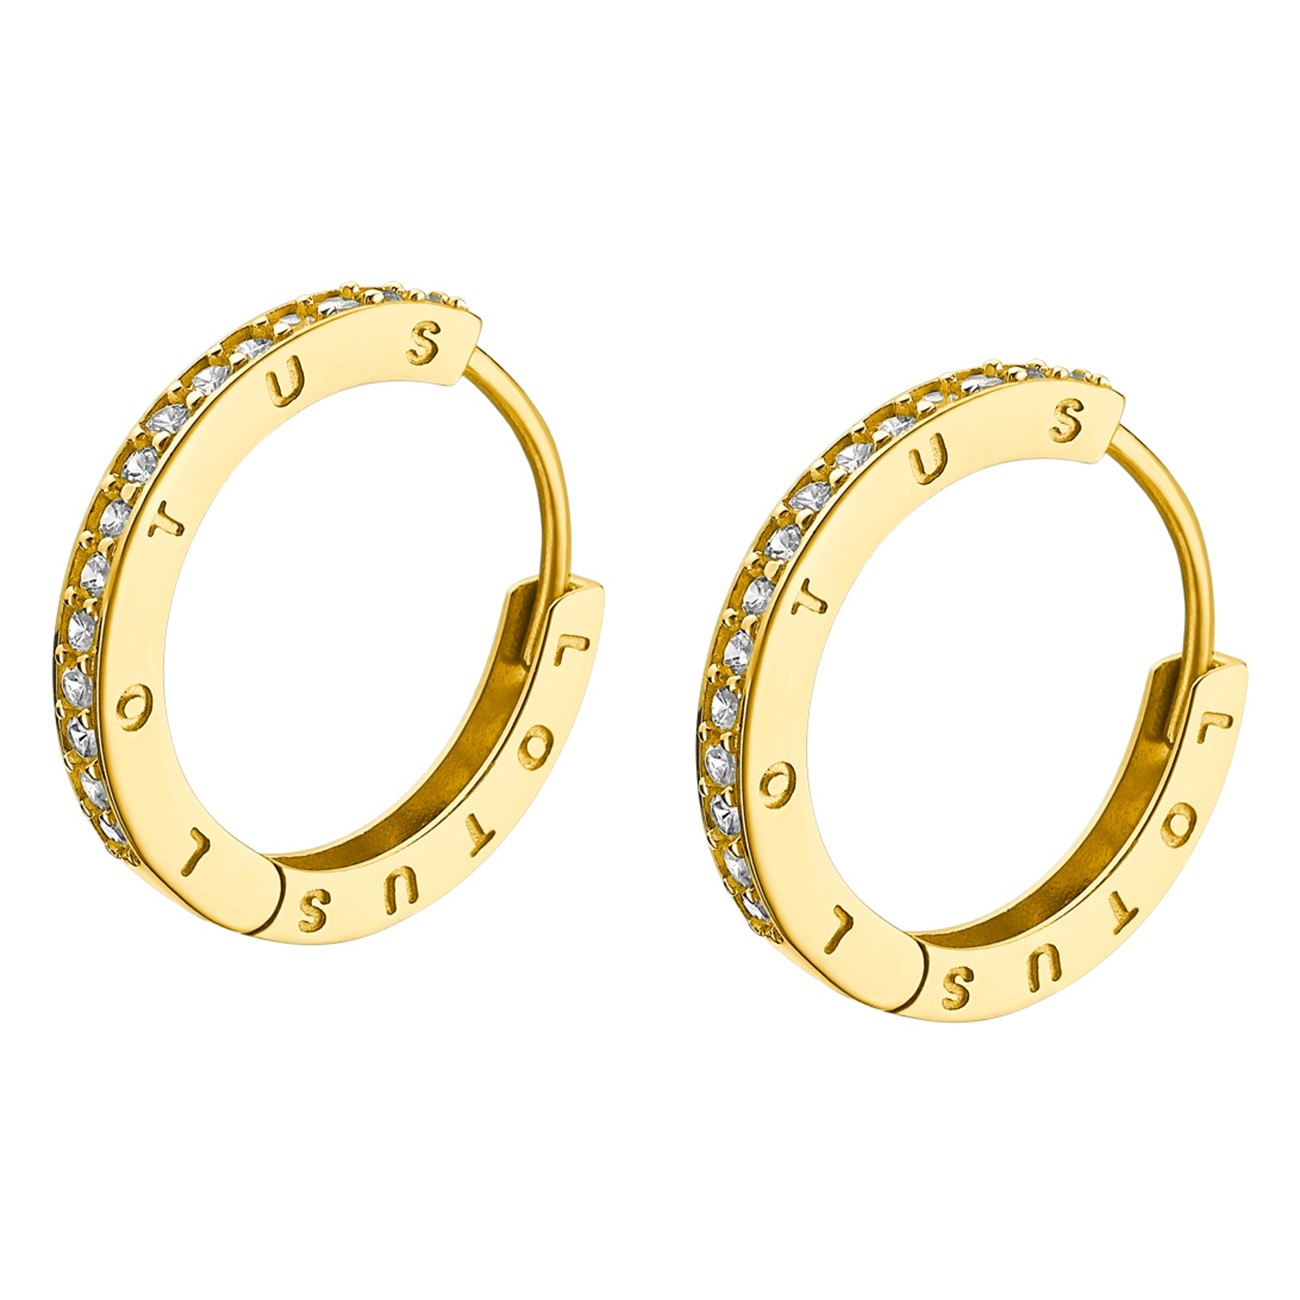 LOTUS Silver - Damen Ohrring vergoldet weiß Creole aus 925 Silber JLP1888-4-4